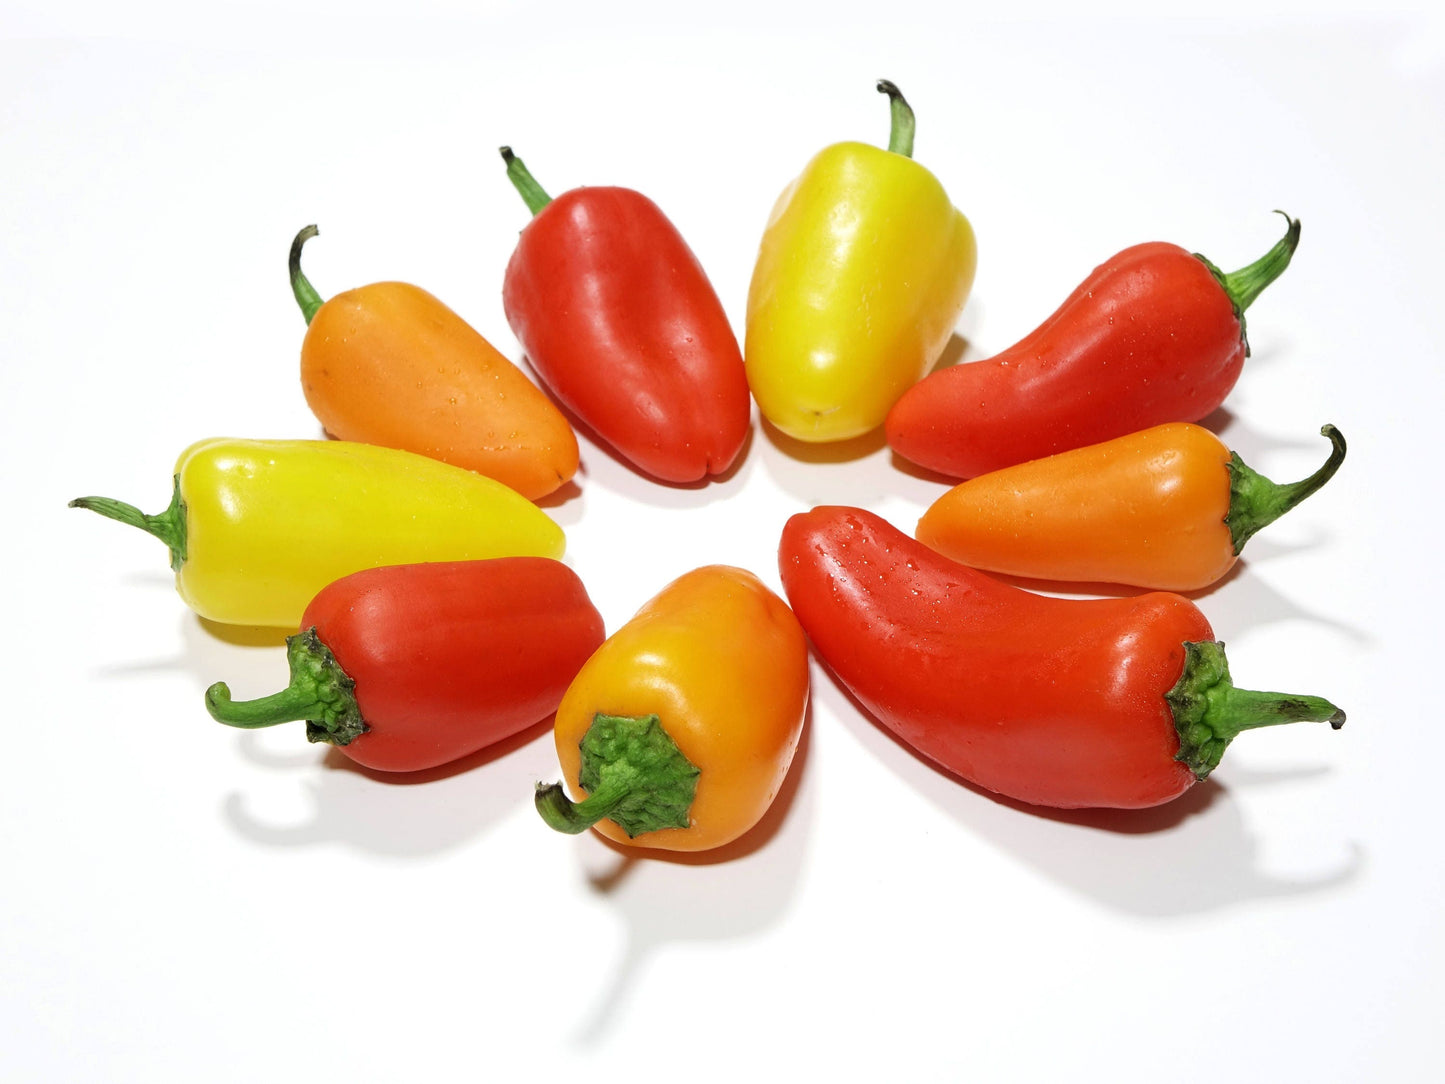 200 SANTA Fe GRANDE PEPPER (Guero Chili Pepper / Yellow Hot Chili Pepper) Capsicum Annuum Vegetable Seeds